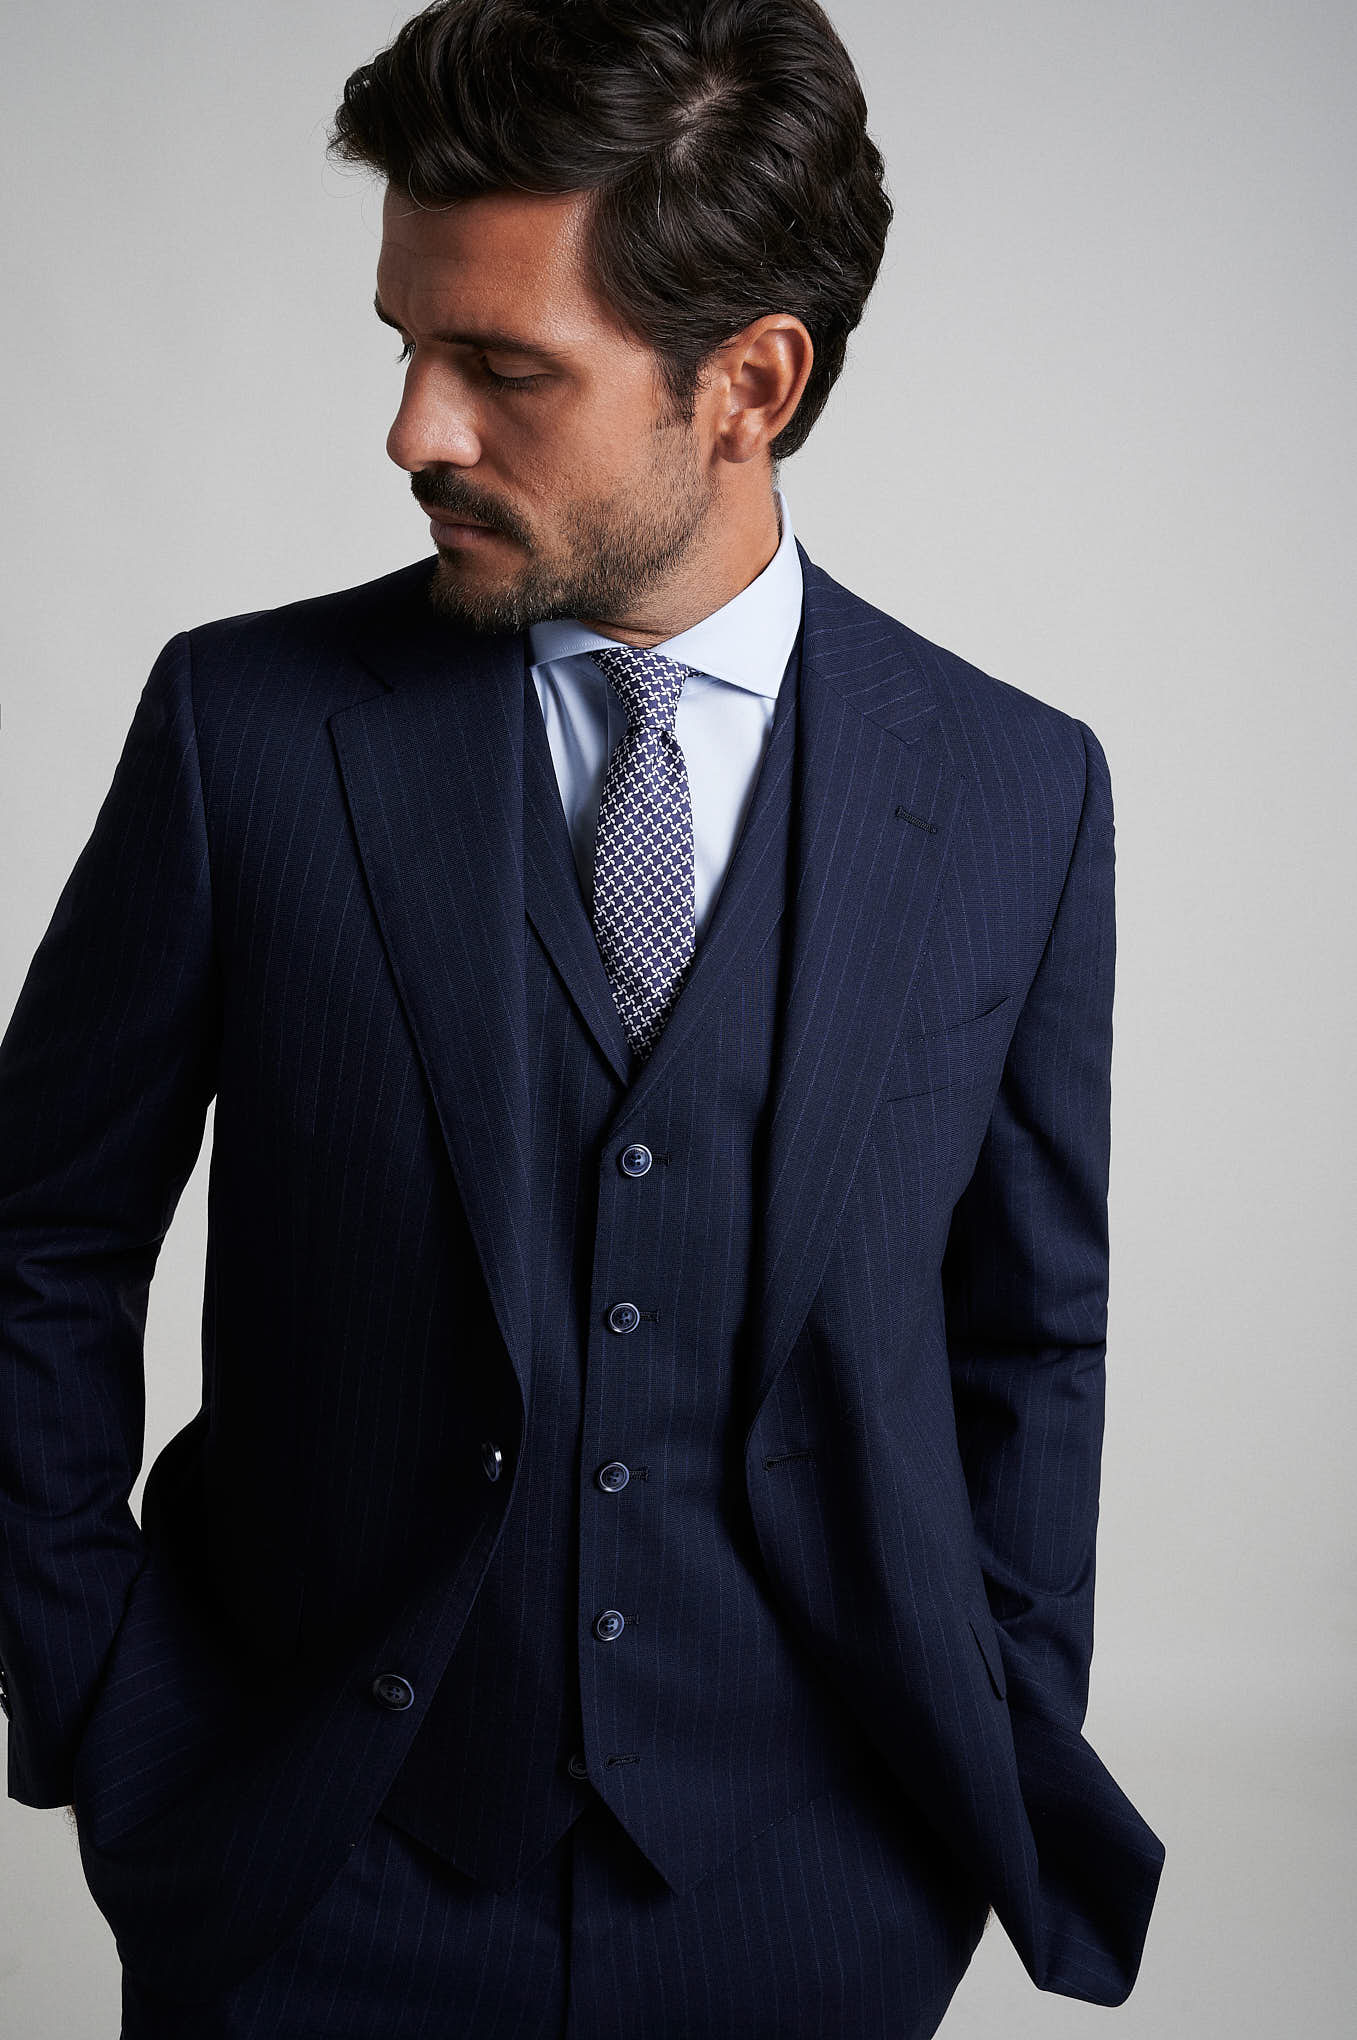 Suit with Vest Dark Blue Formal Man